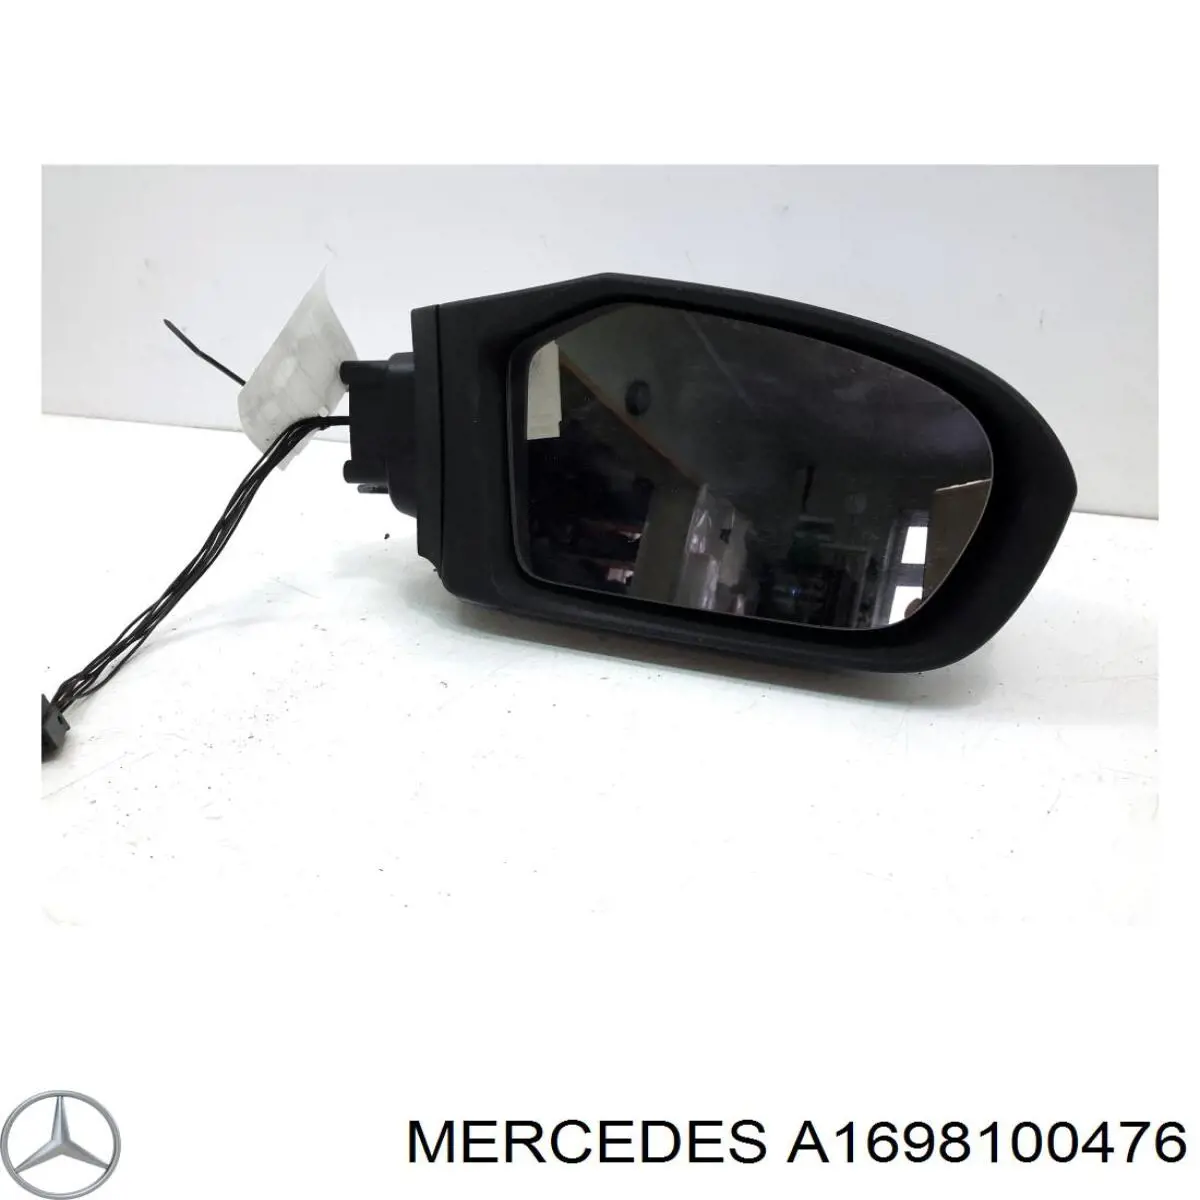 A1698100476 Mercedes espejo retrovisor derecho